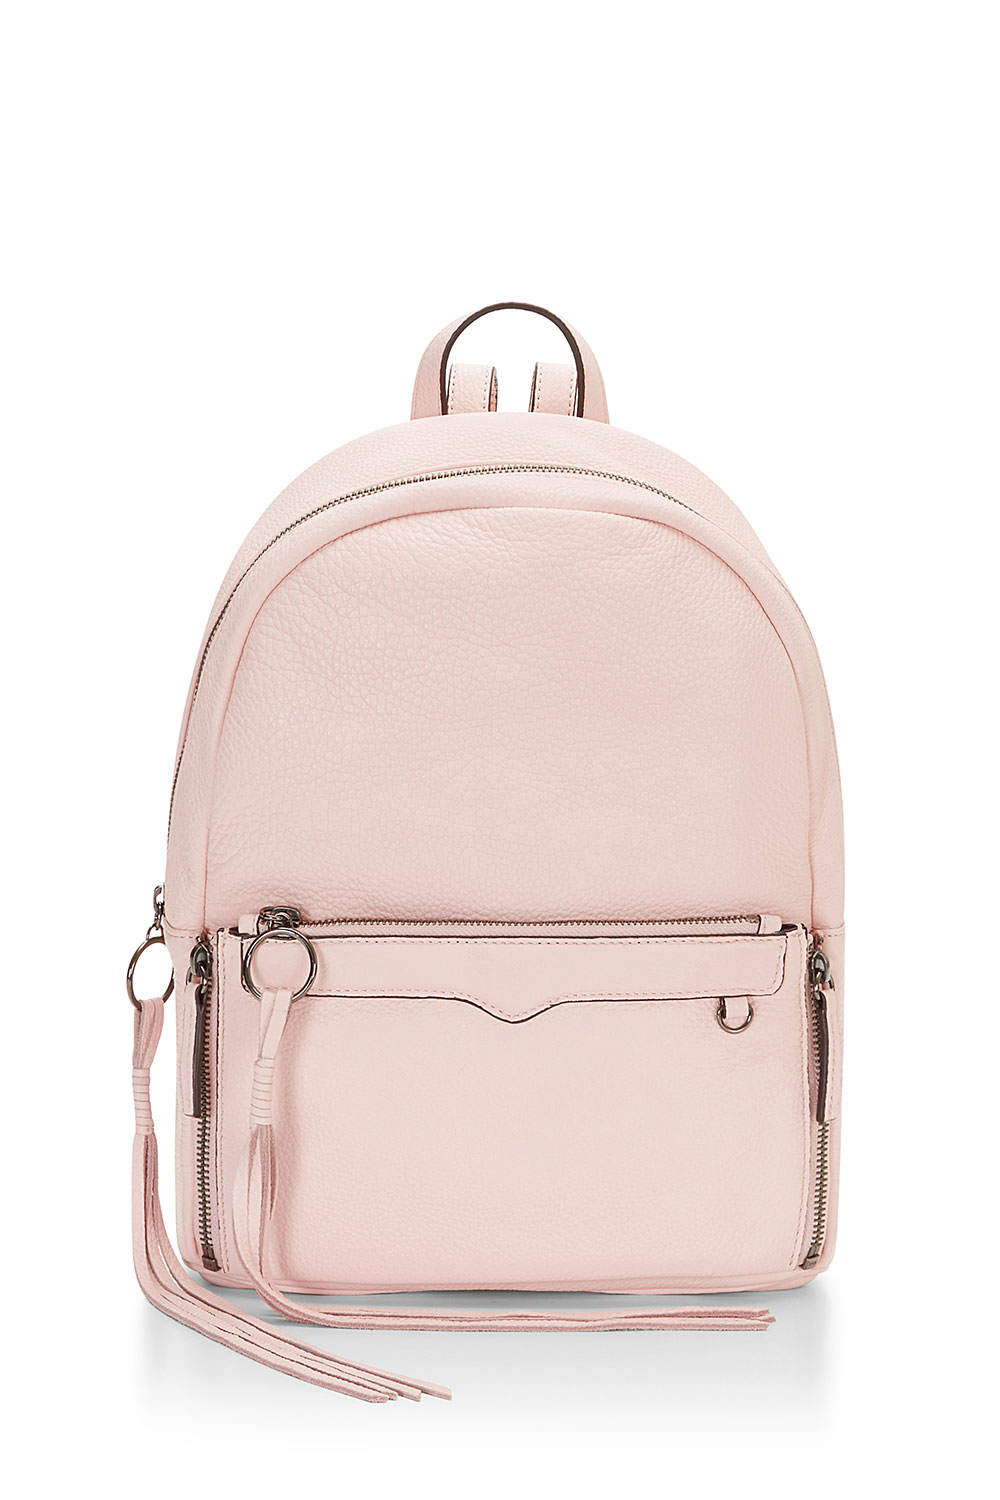 Rebecca minkoff Lola Backpack in Pink | Lyst